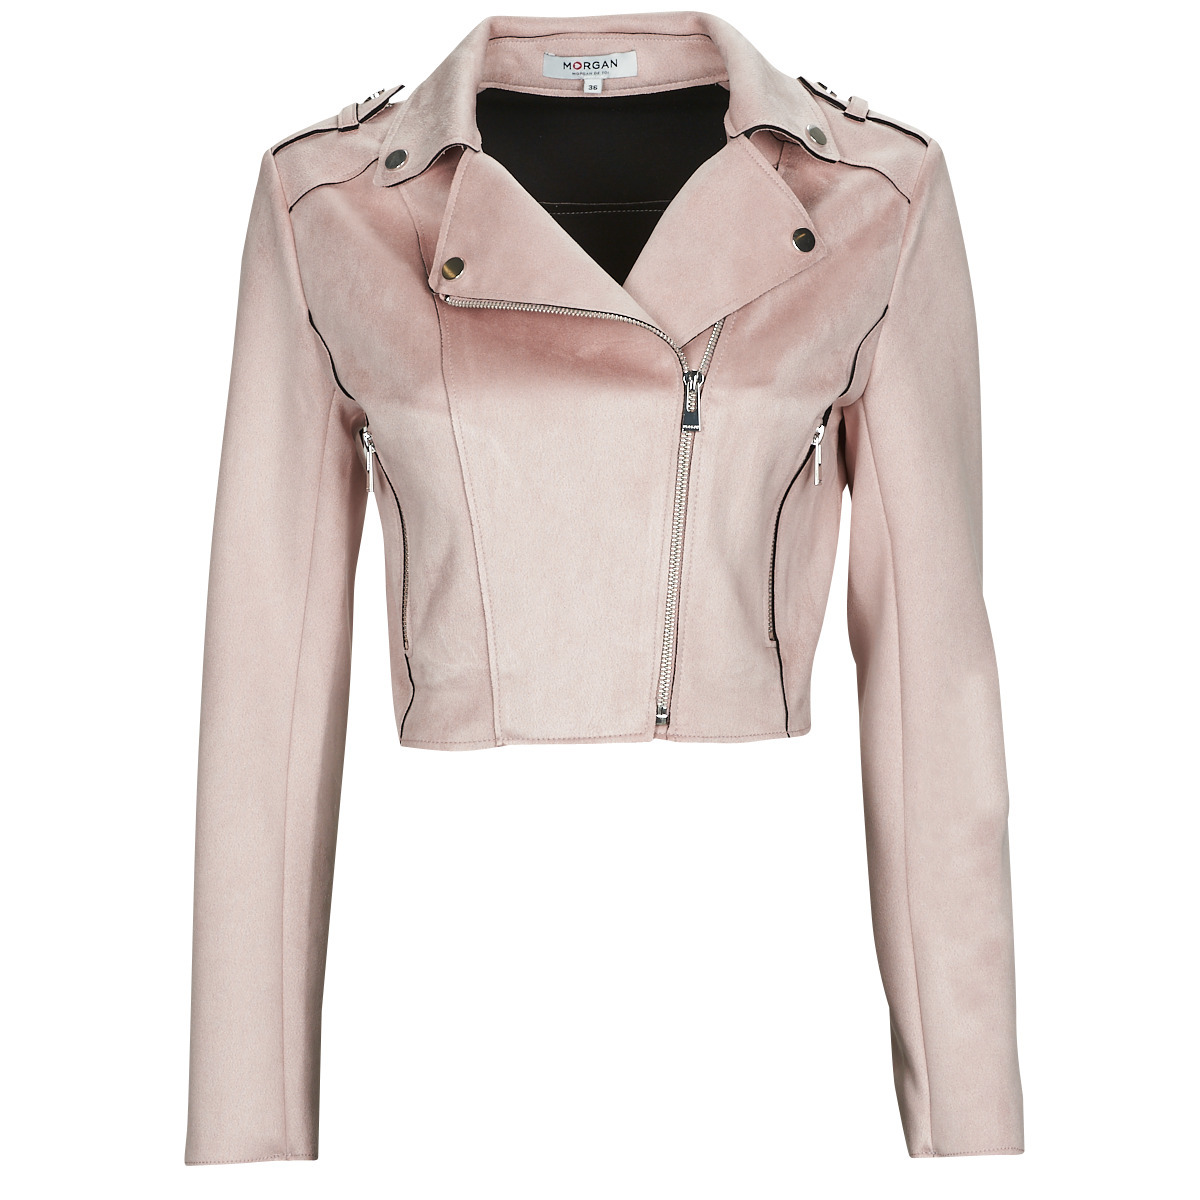 Morgan - Ladies Leather Jacket in Pink at Spartoo GOOFASH